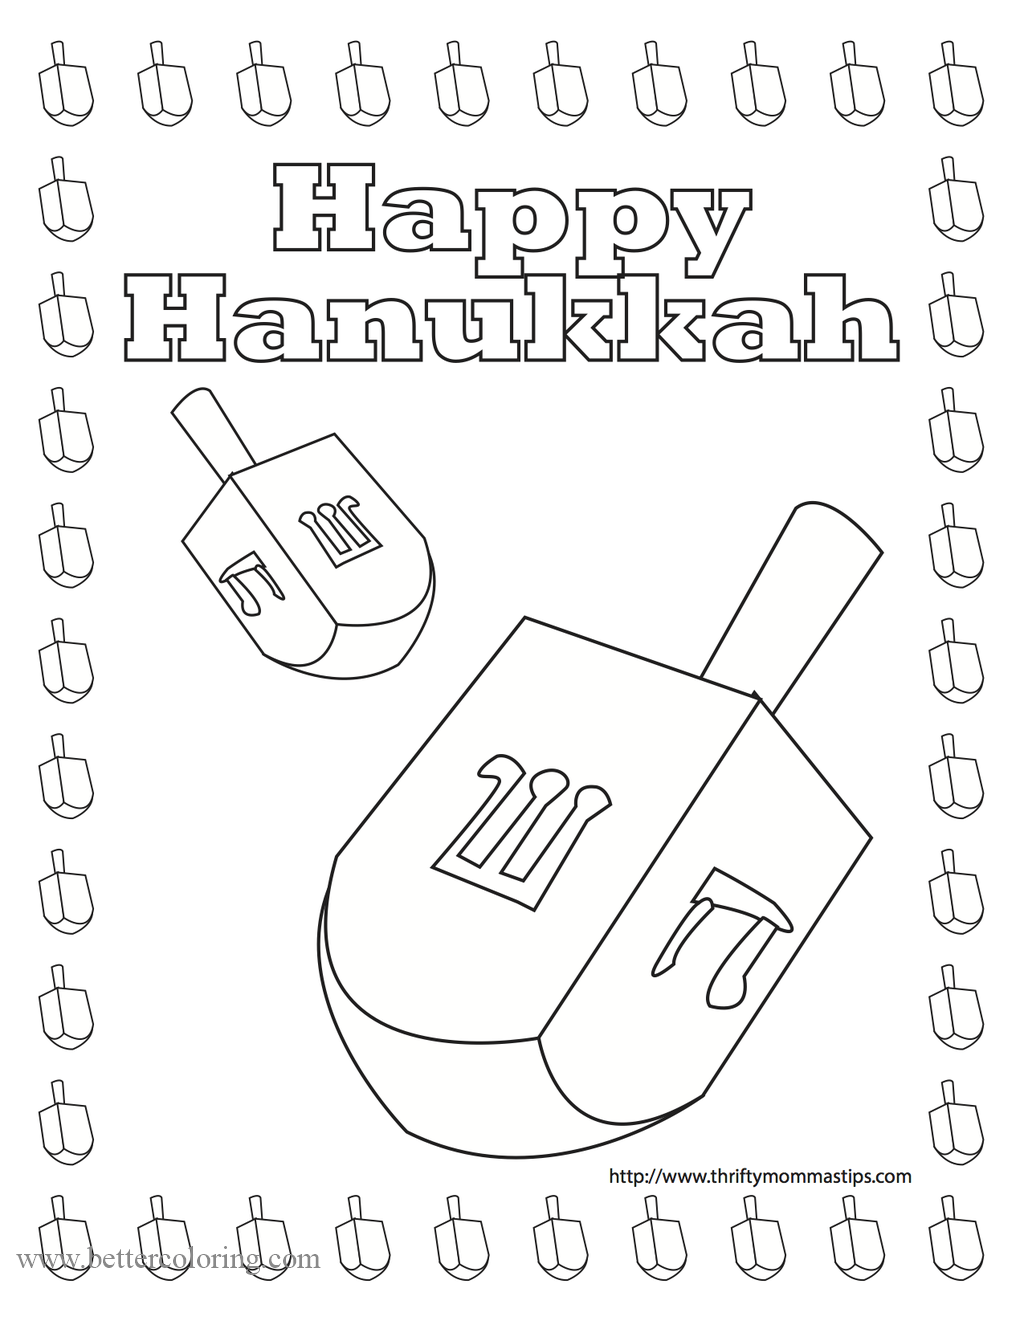 Free Dreidel for Hanukkah Coloring Pages printable